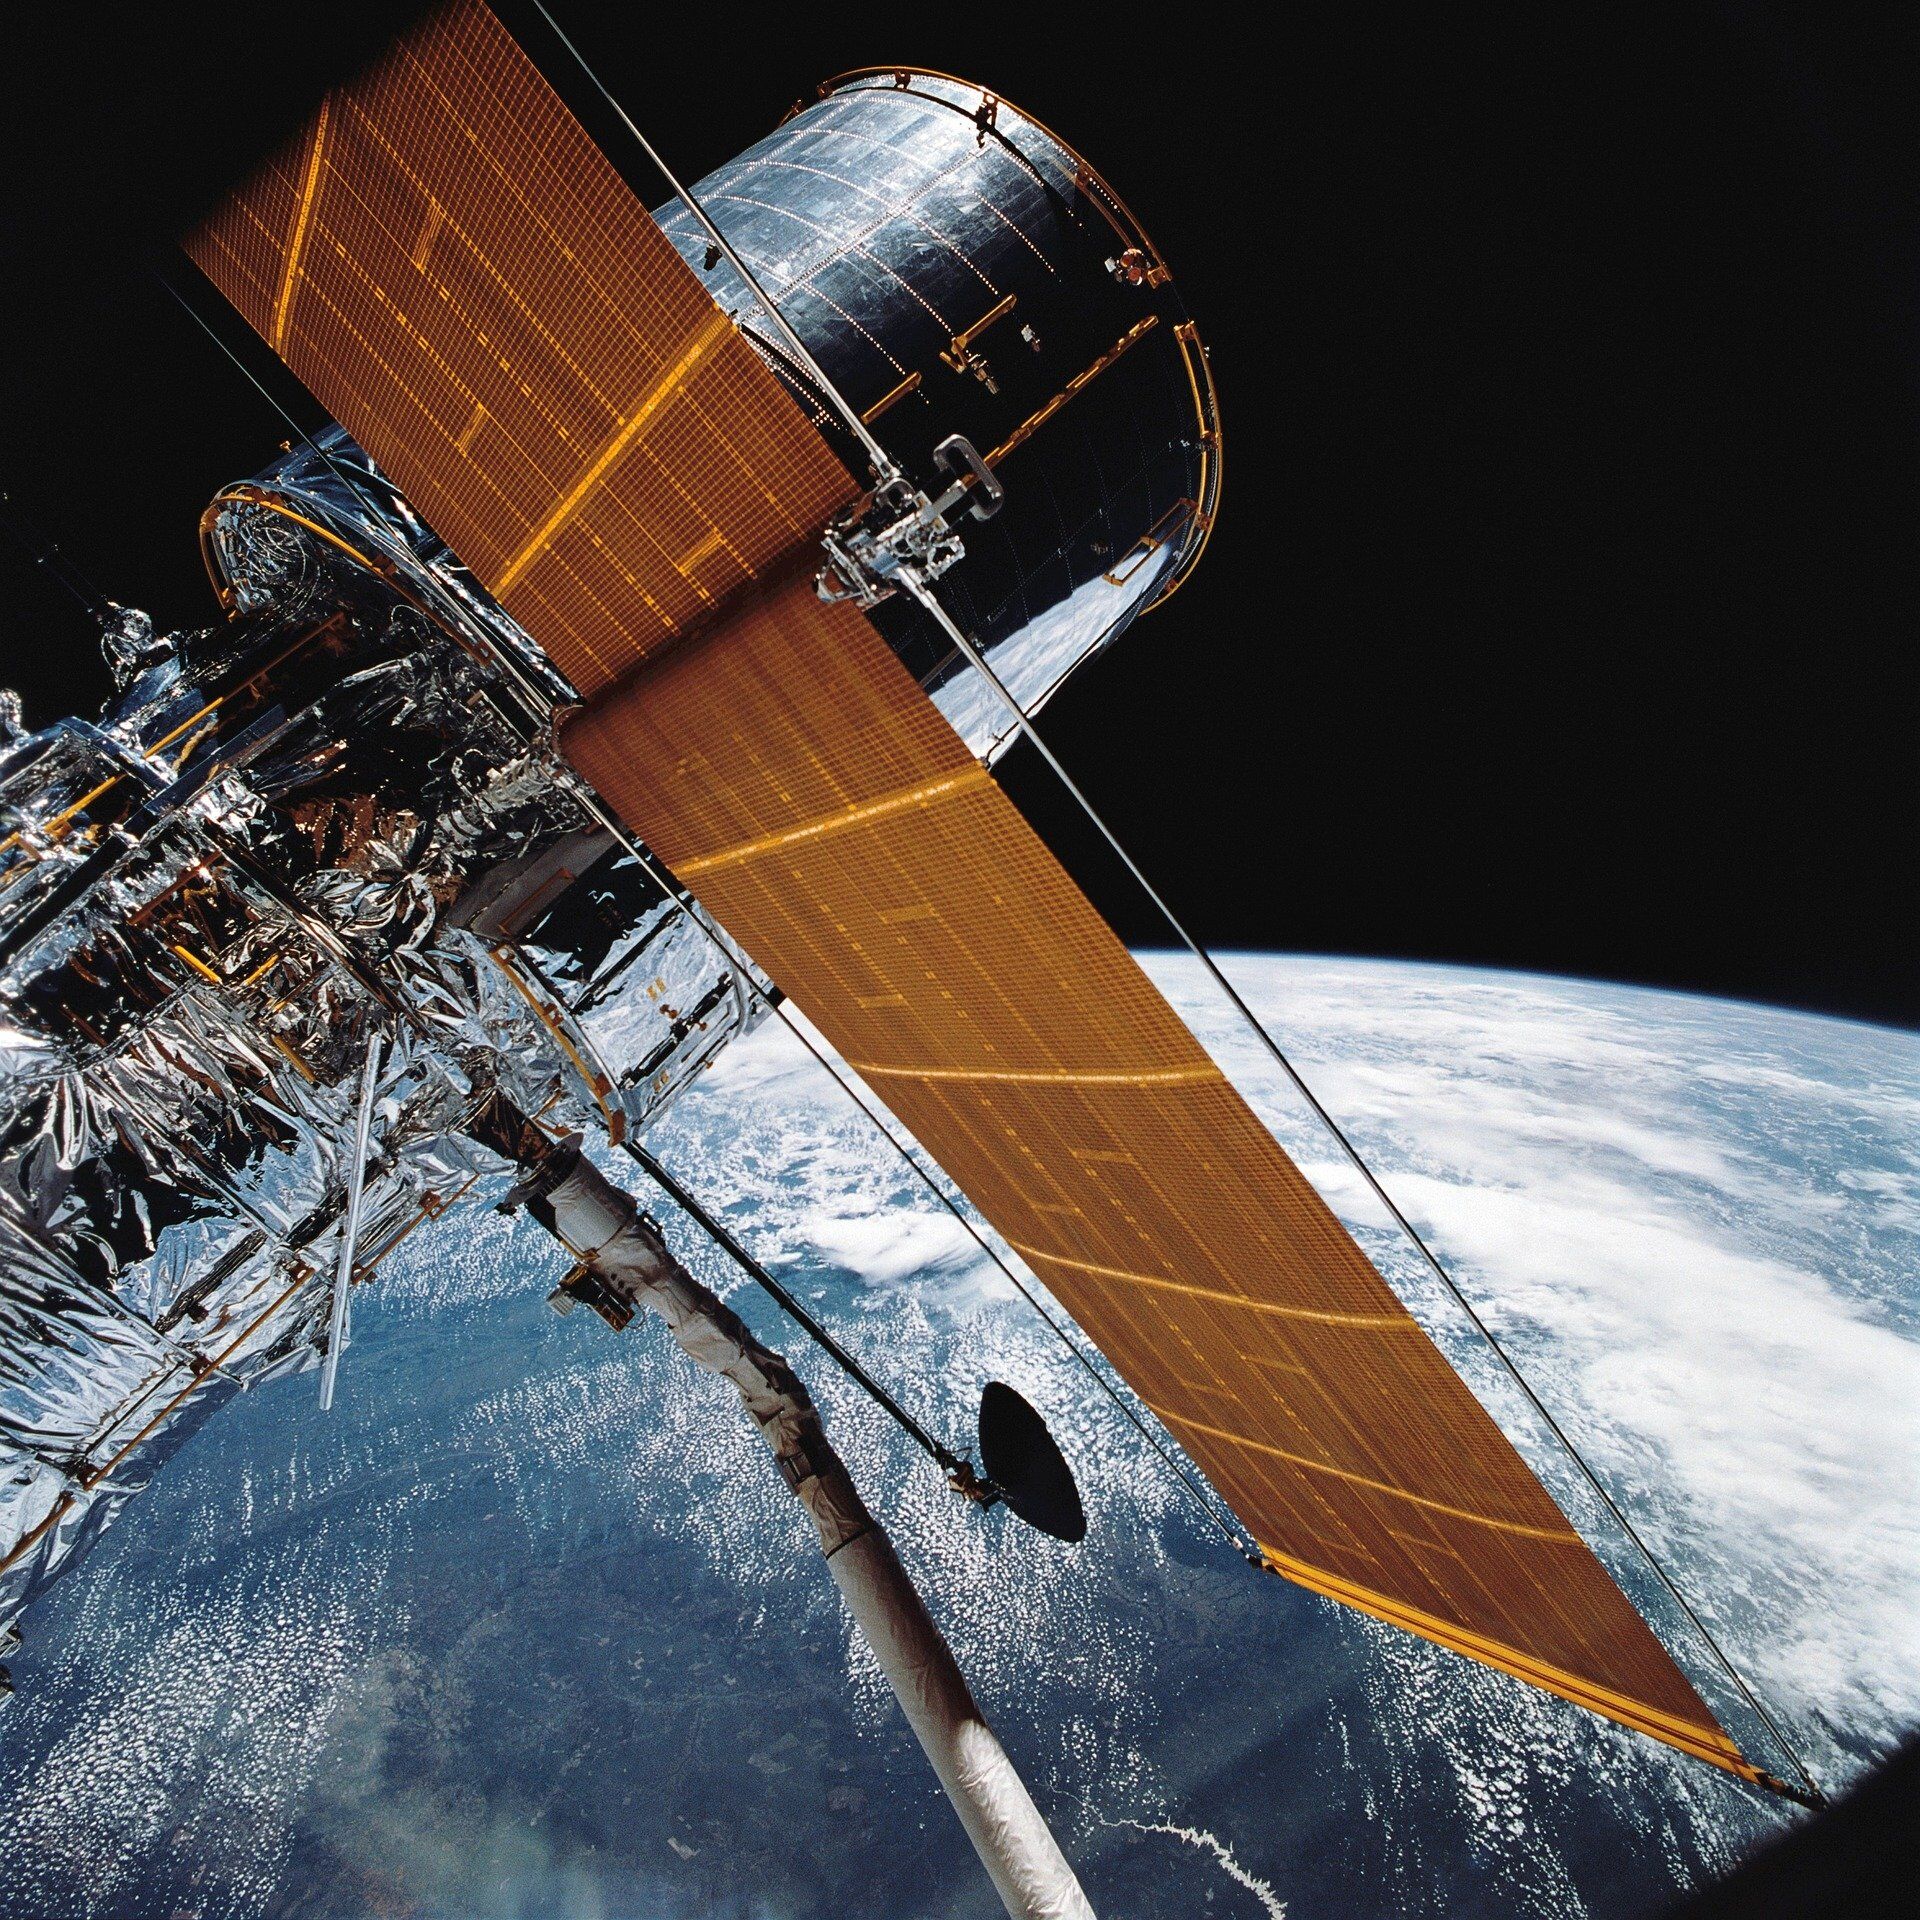 Hubble telescope - Sputnik International, 1920, 25.12.2021